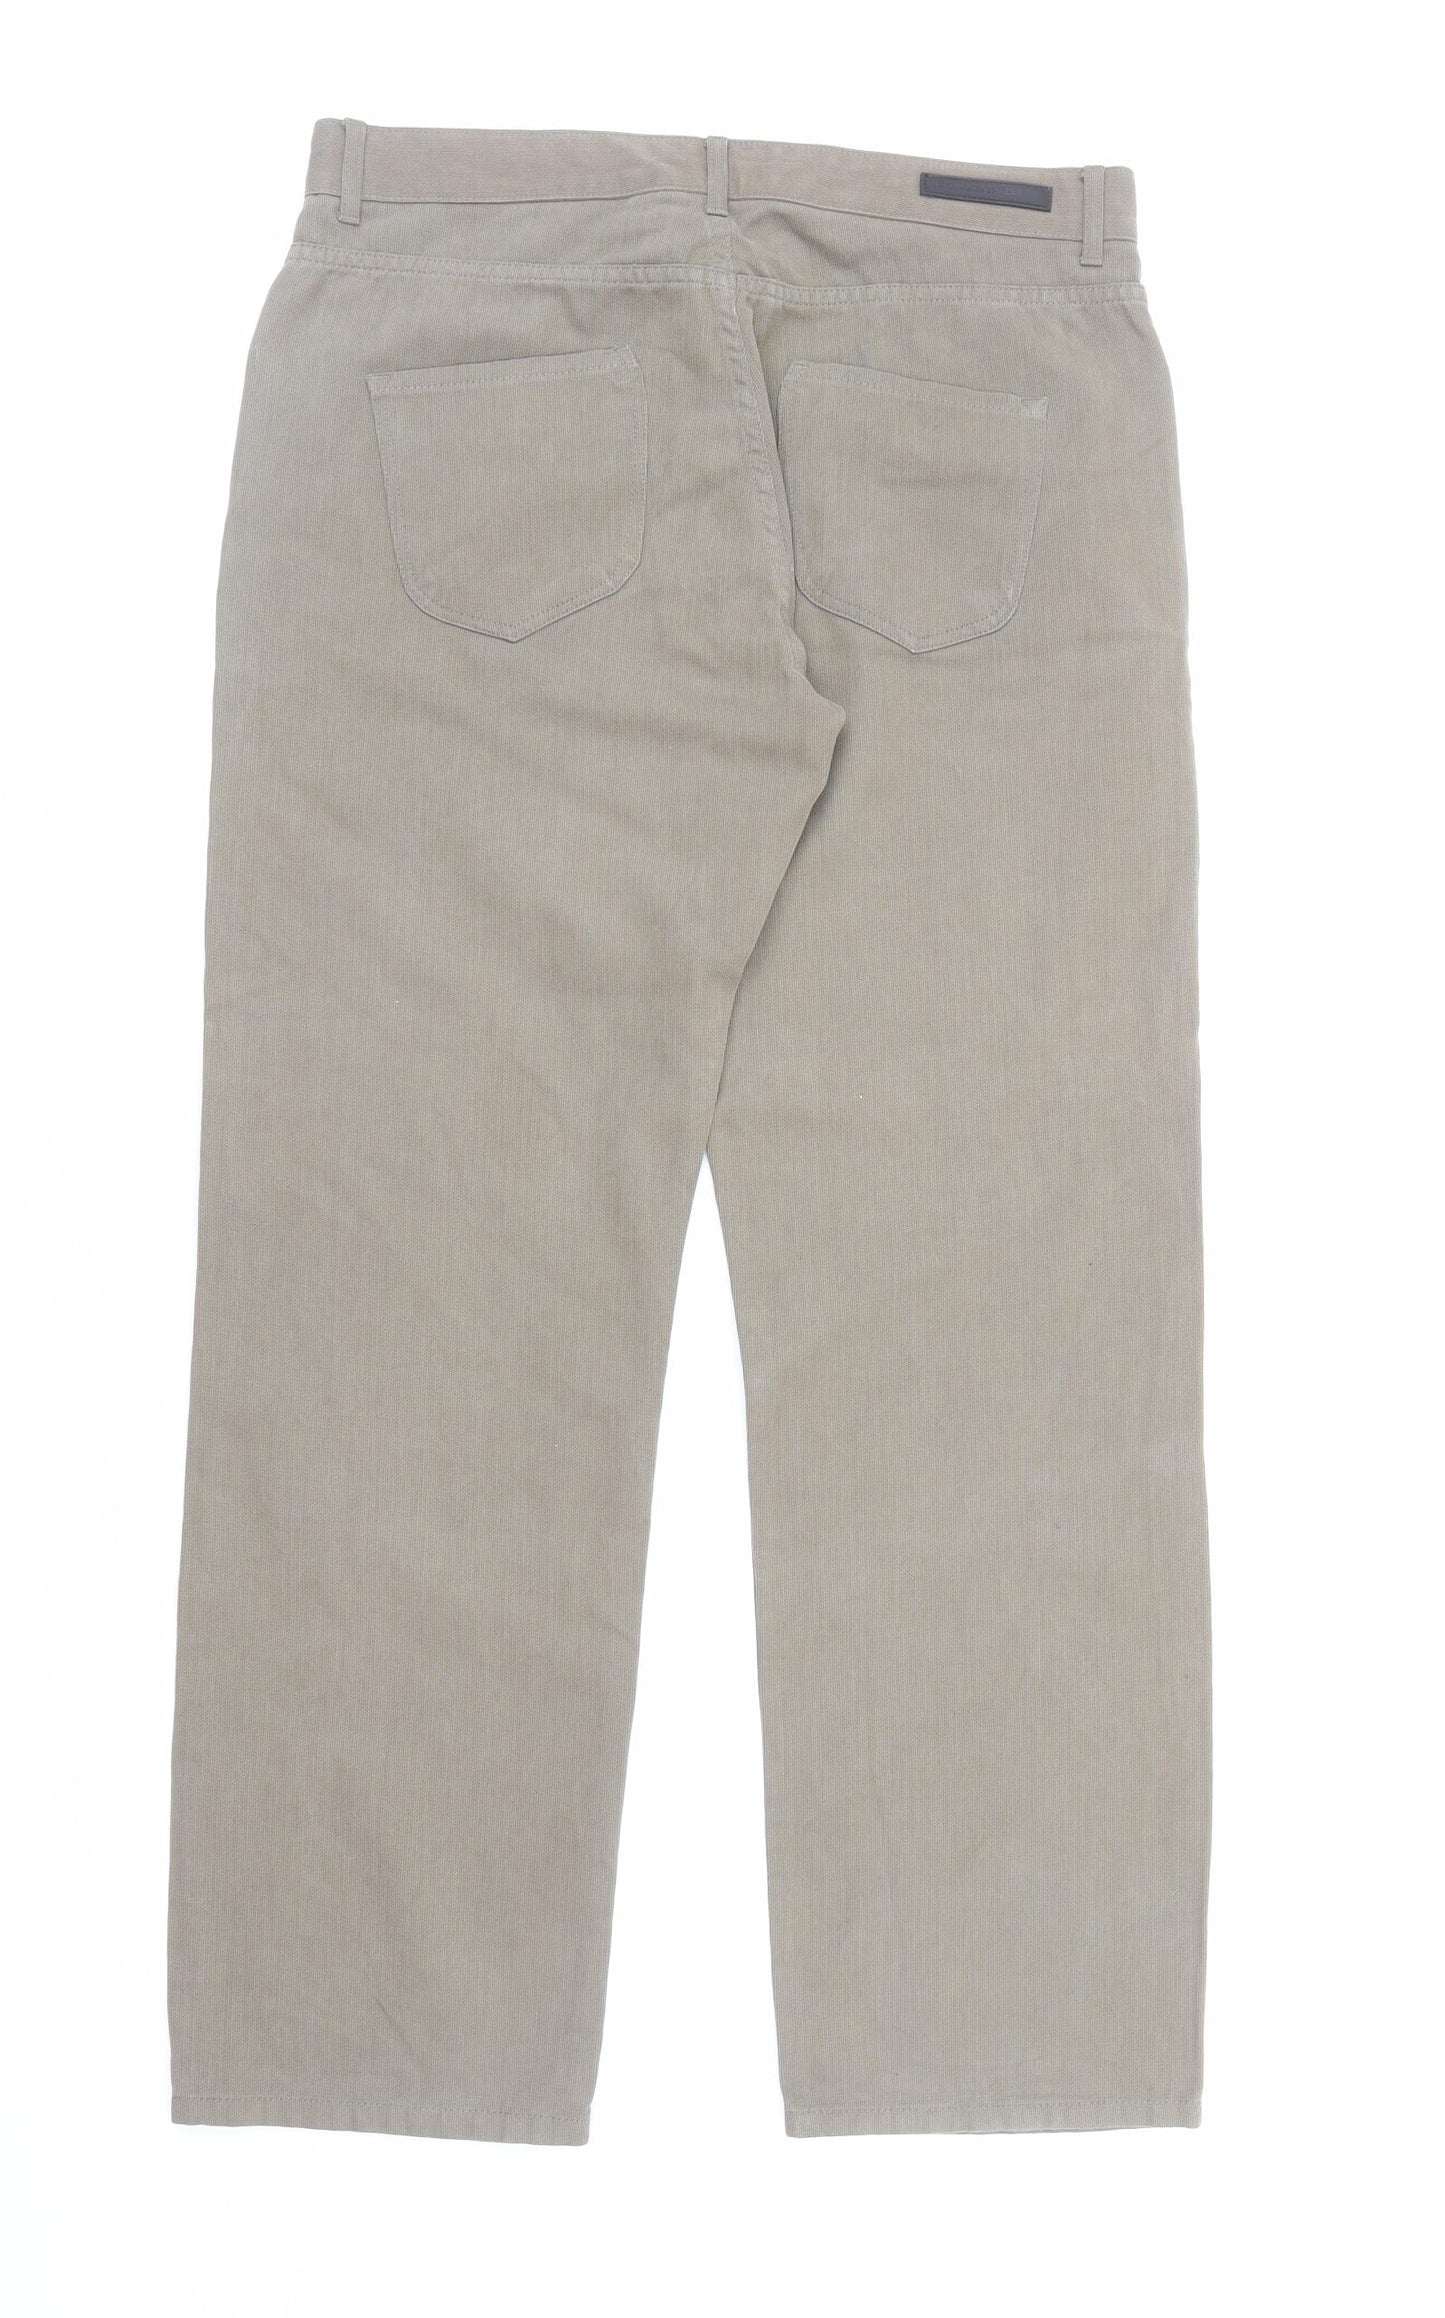 NEXT Mens Brown Cotton Trousers Size L Regular Zip